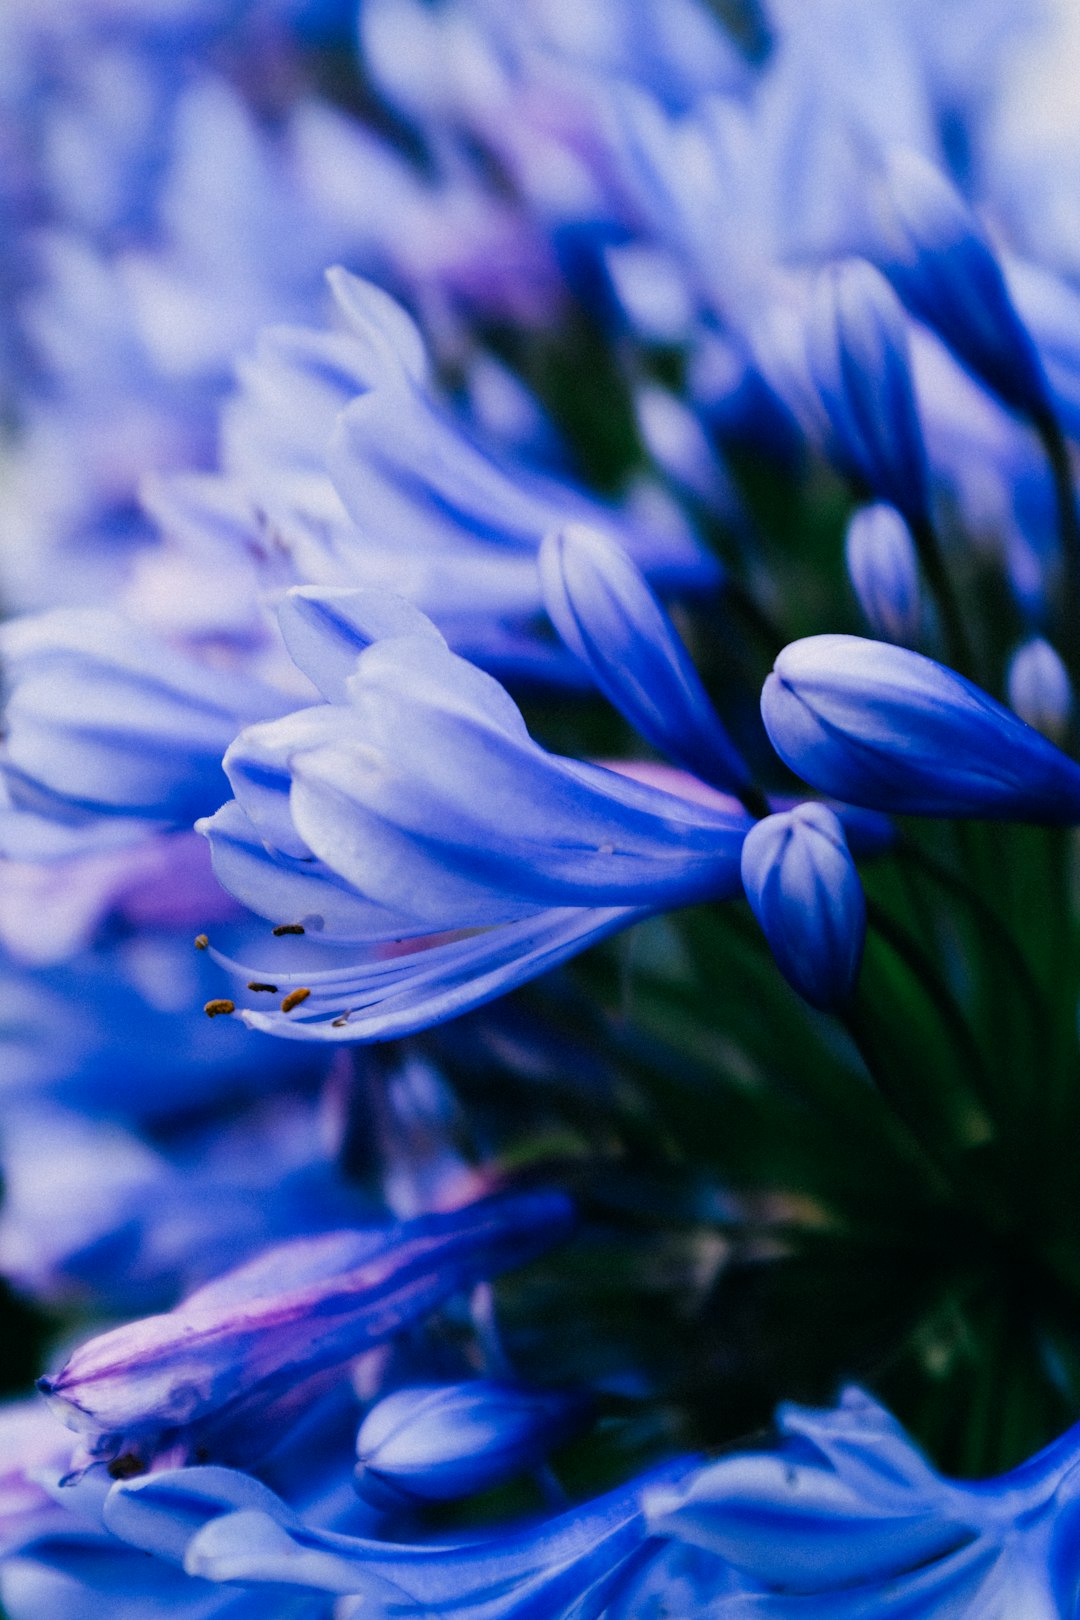 blue crocus flower in bloom during daytime